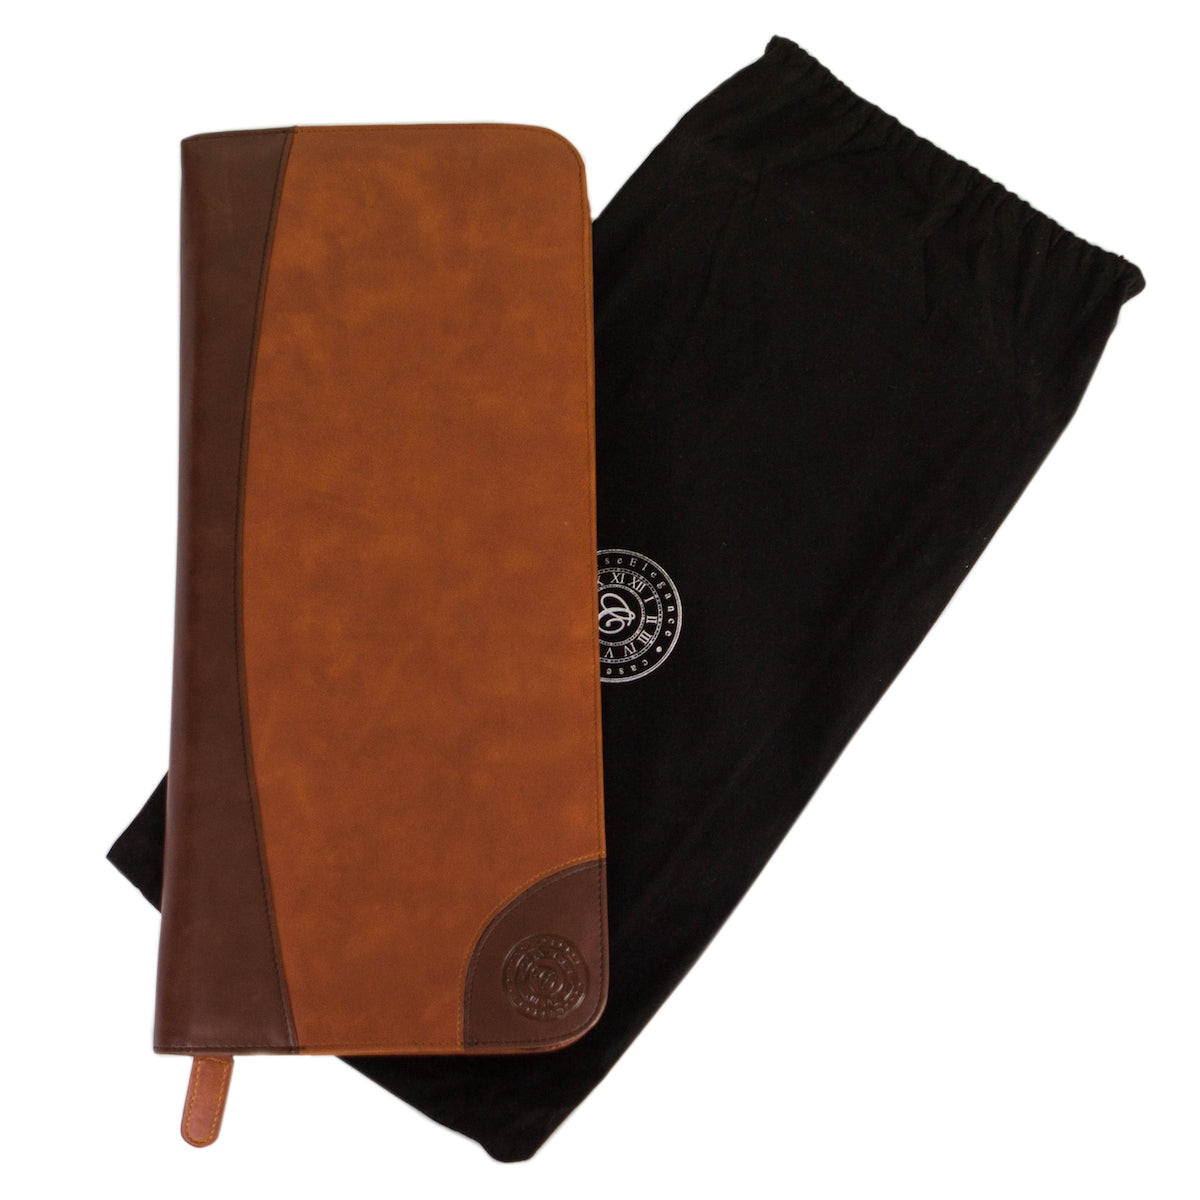 Travel Tie Case - Brown Vegan Leather